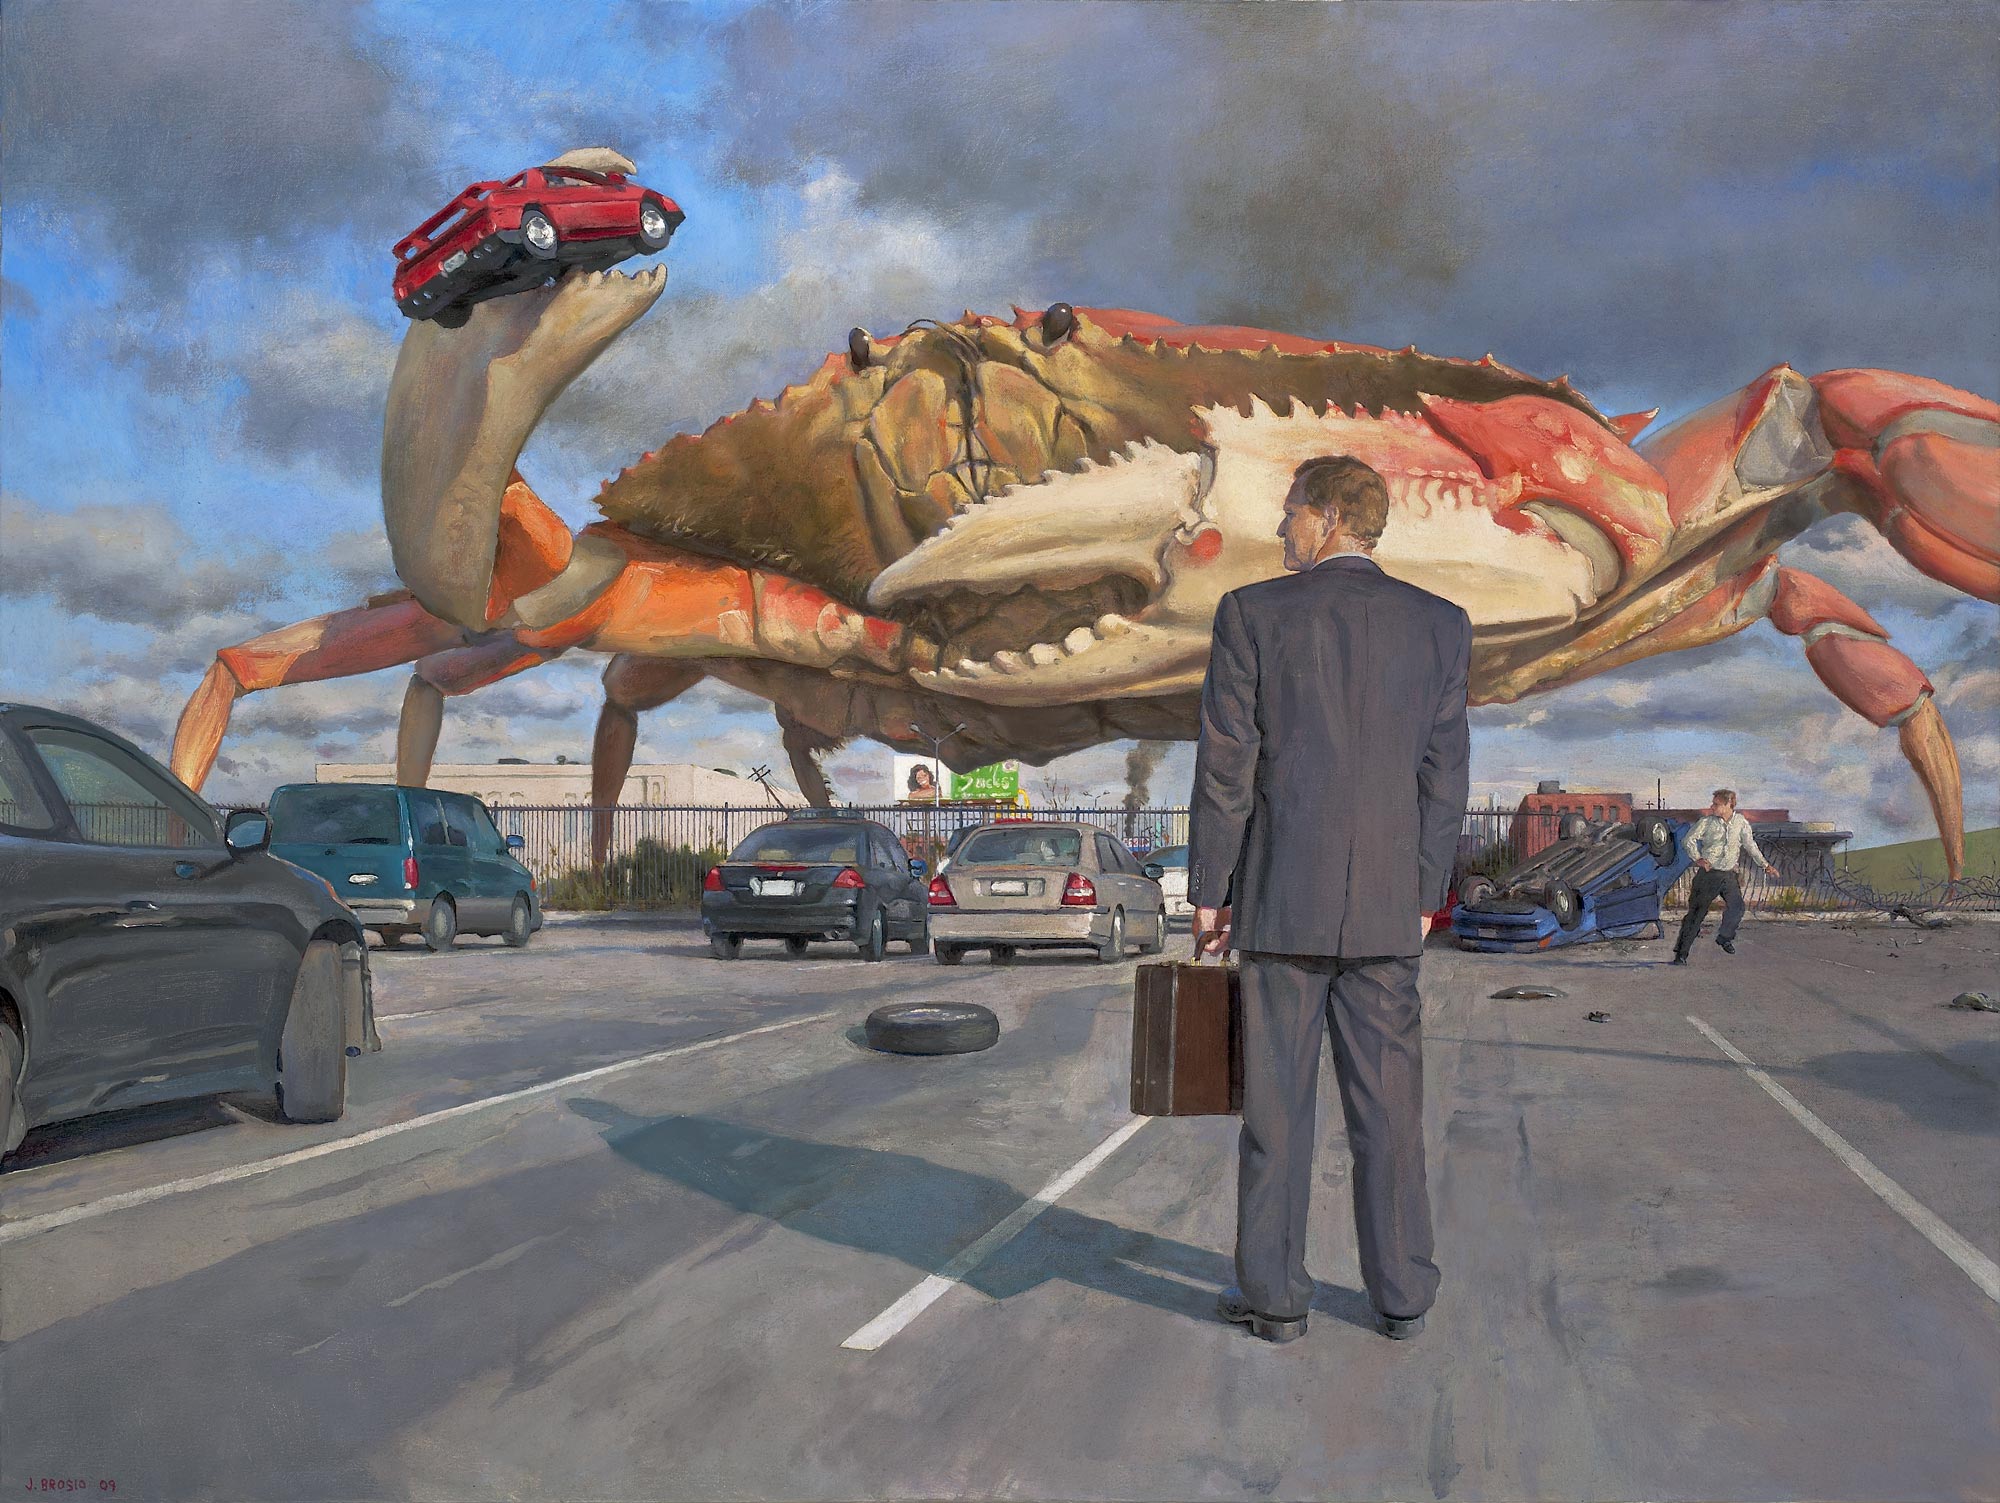 Digital Art Fantasy Art Surreal John Brosio Artwork Animals Painting Crabs Car Men Giant Parking Des 2000x1503